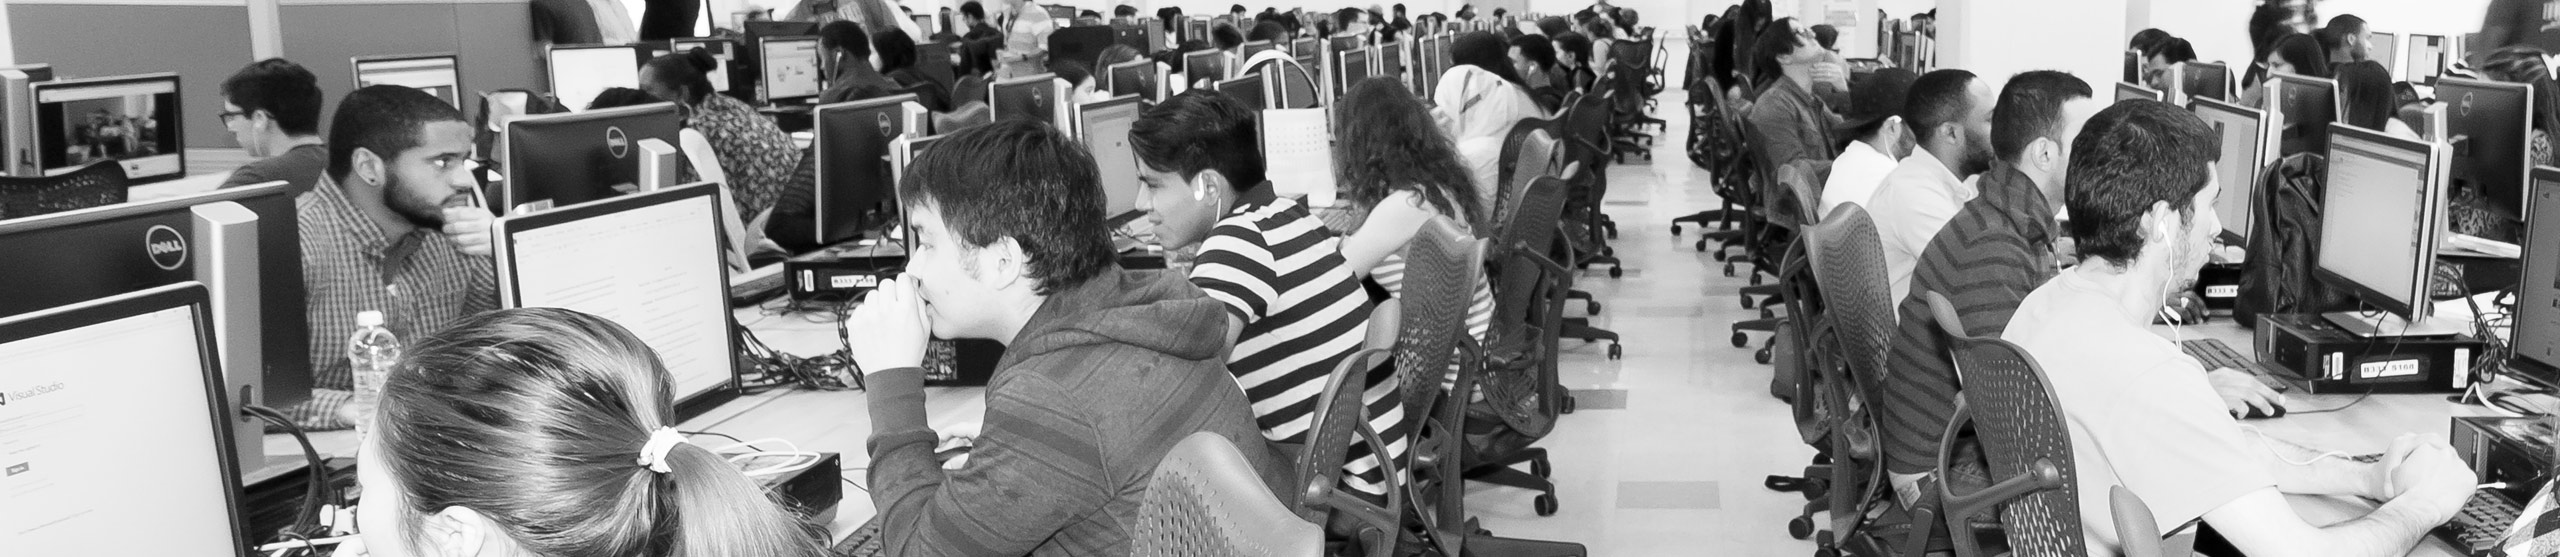 Students using computers at Computer LAB